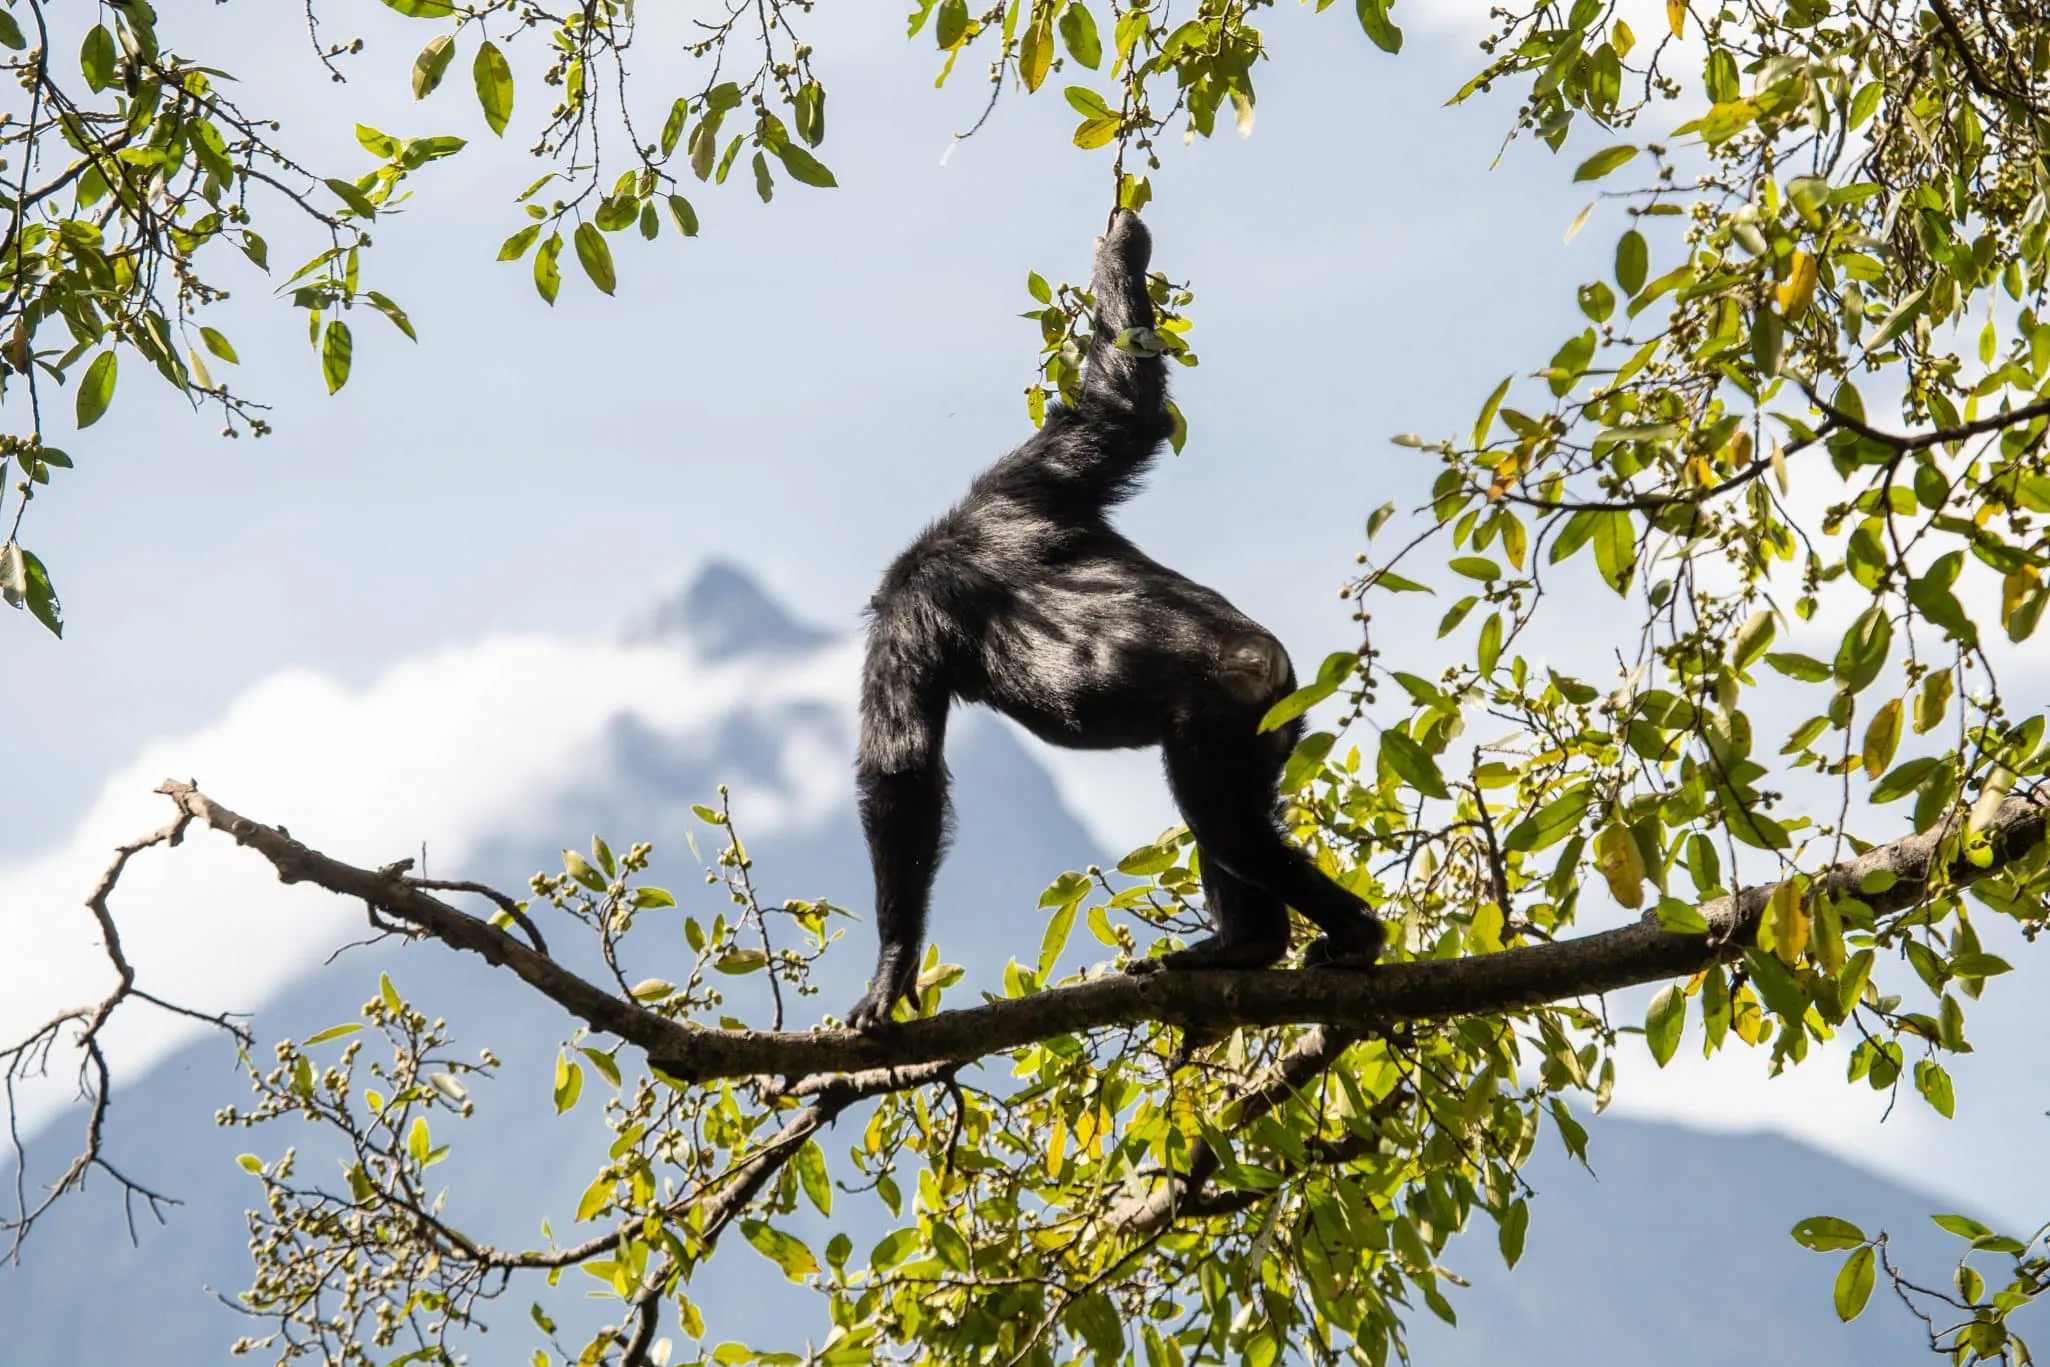 Chimpanzee gazing out over Virunga National Park